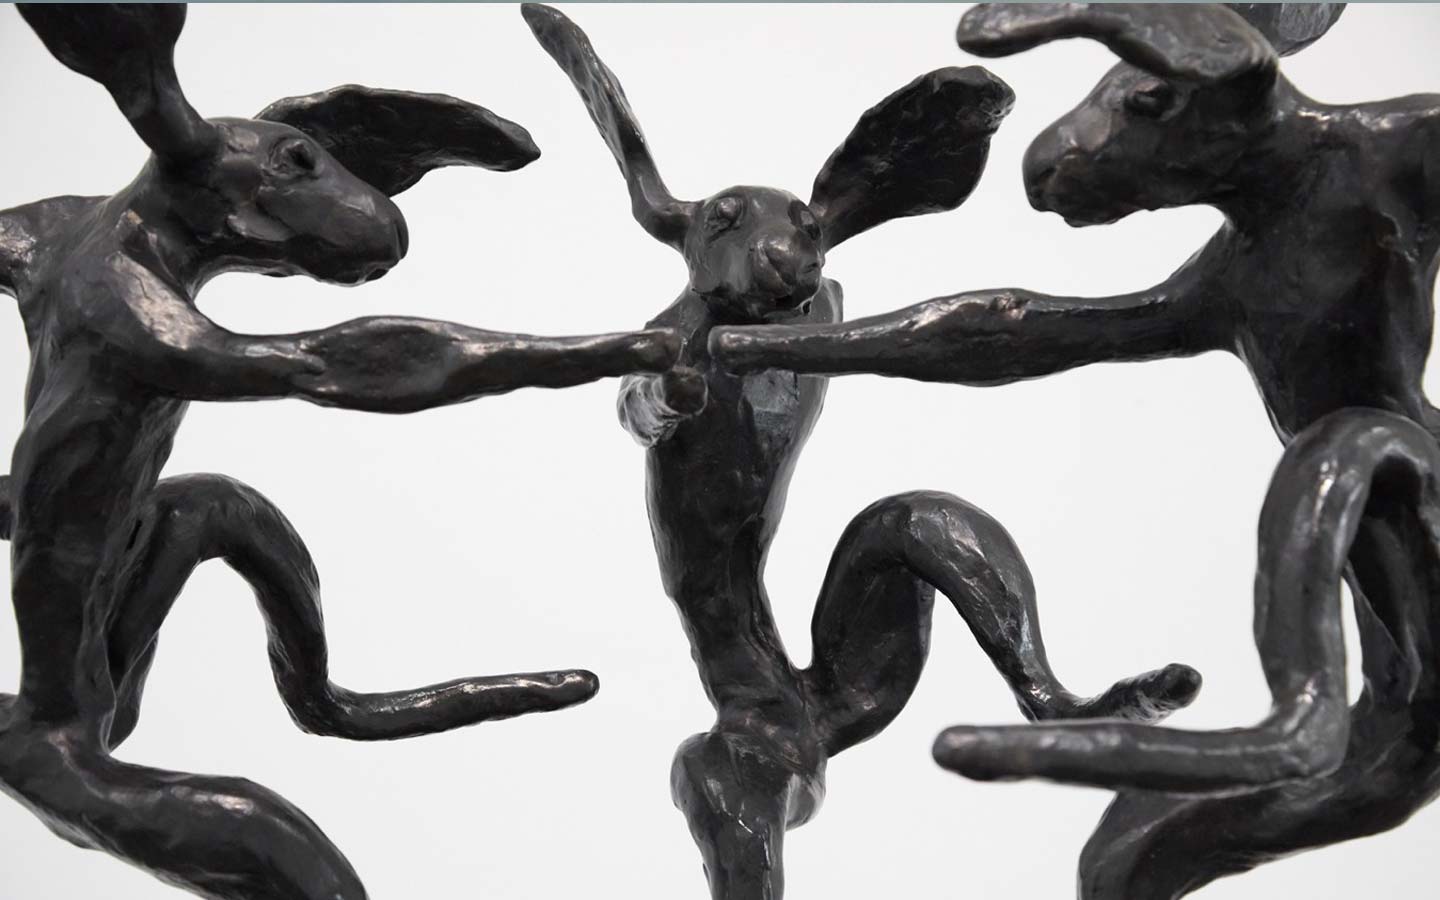 Bryars Rabbit  Gavin Bryars debuts new work amongst Barry Flanagan's Hares at the IKON Gallery